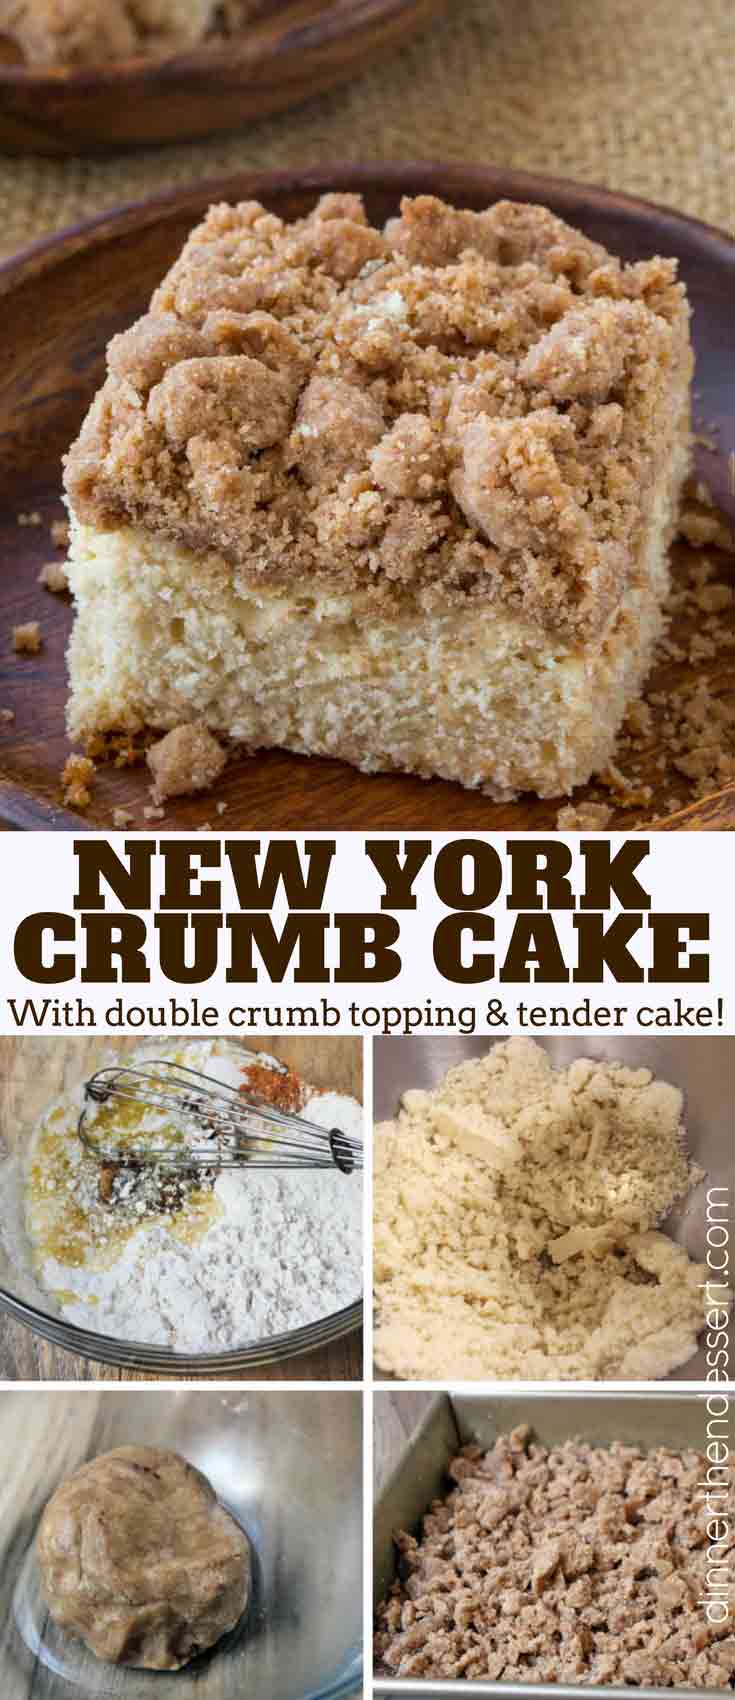 New York Crumb Cake Collage